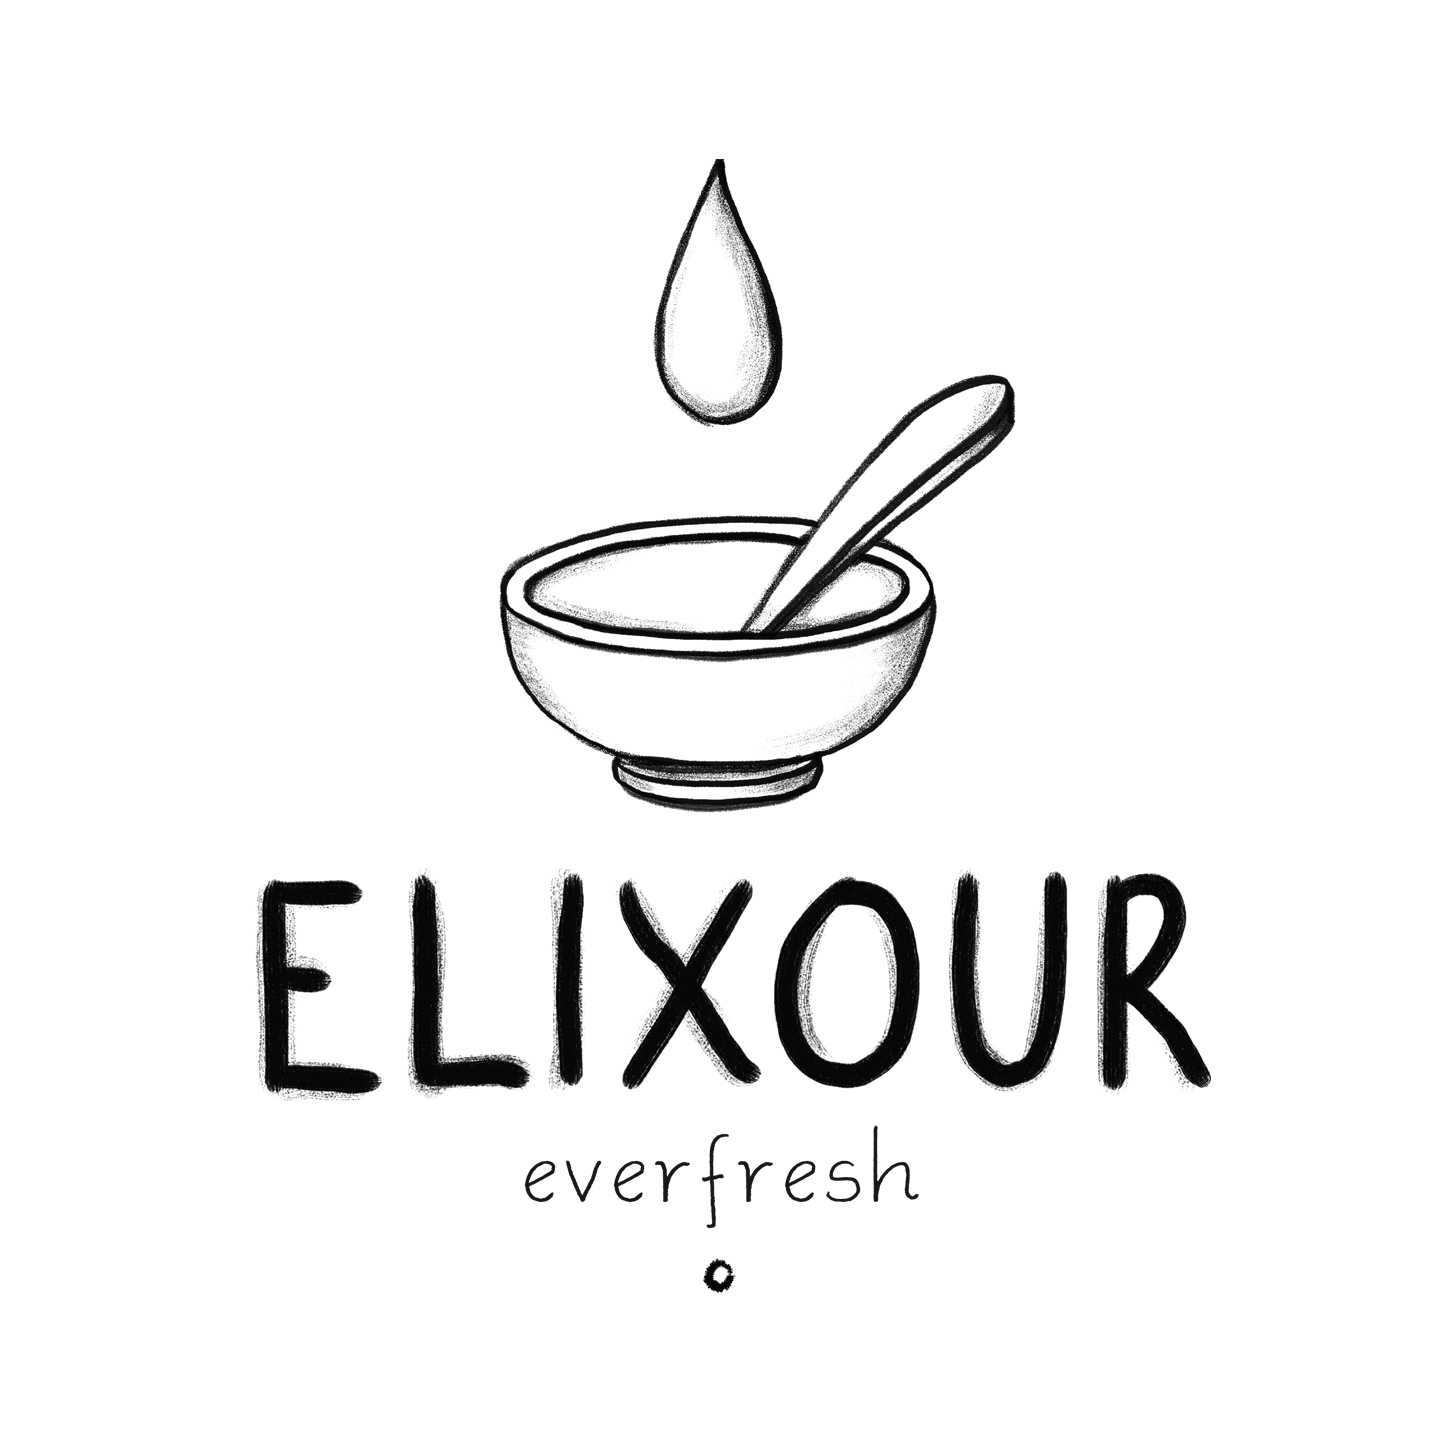 B_elixour logo.jpg